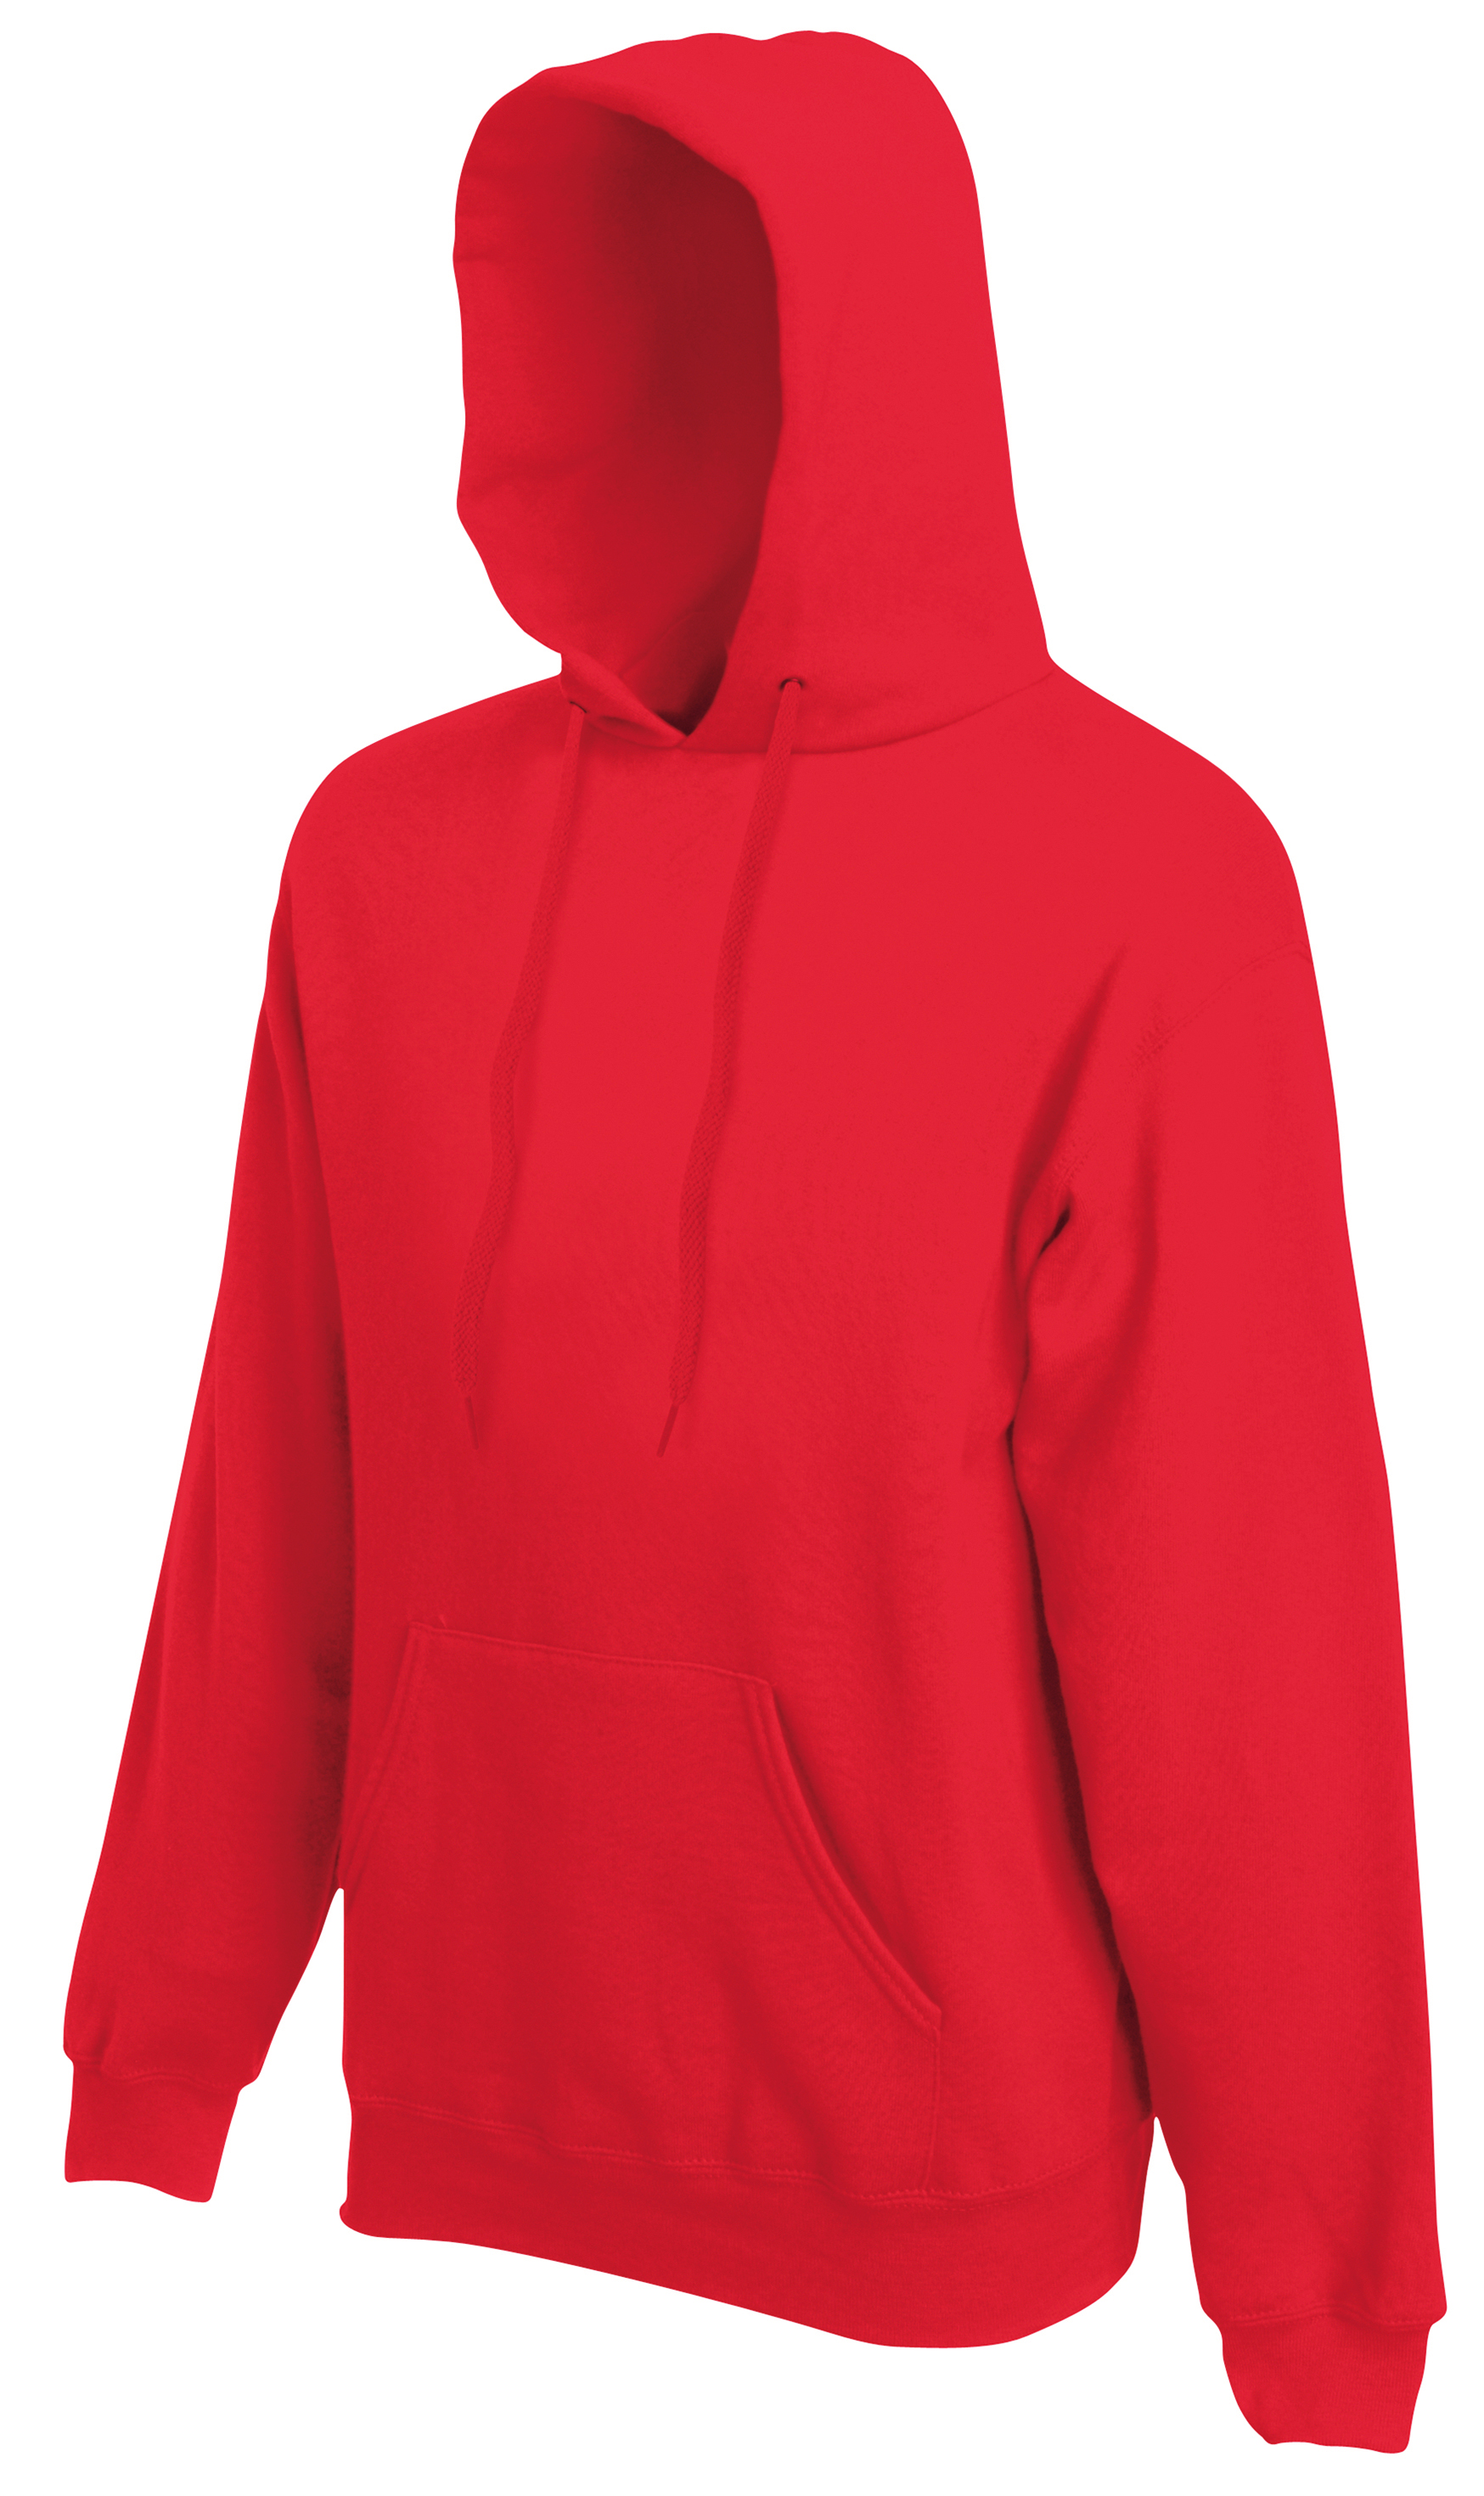 ax-httpswebsystems.s3.amazonaws.comtmp_for_downloadfruit-of-the-loom-premium-70-30-hooded-sweatshirt-red.jpeg